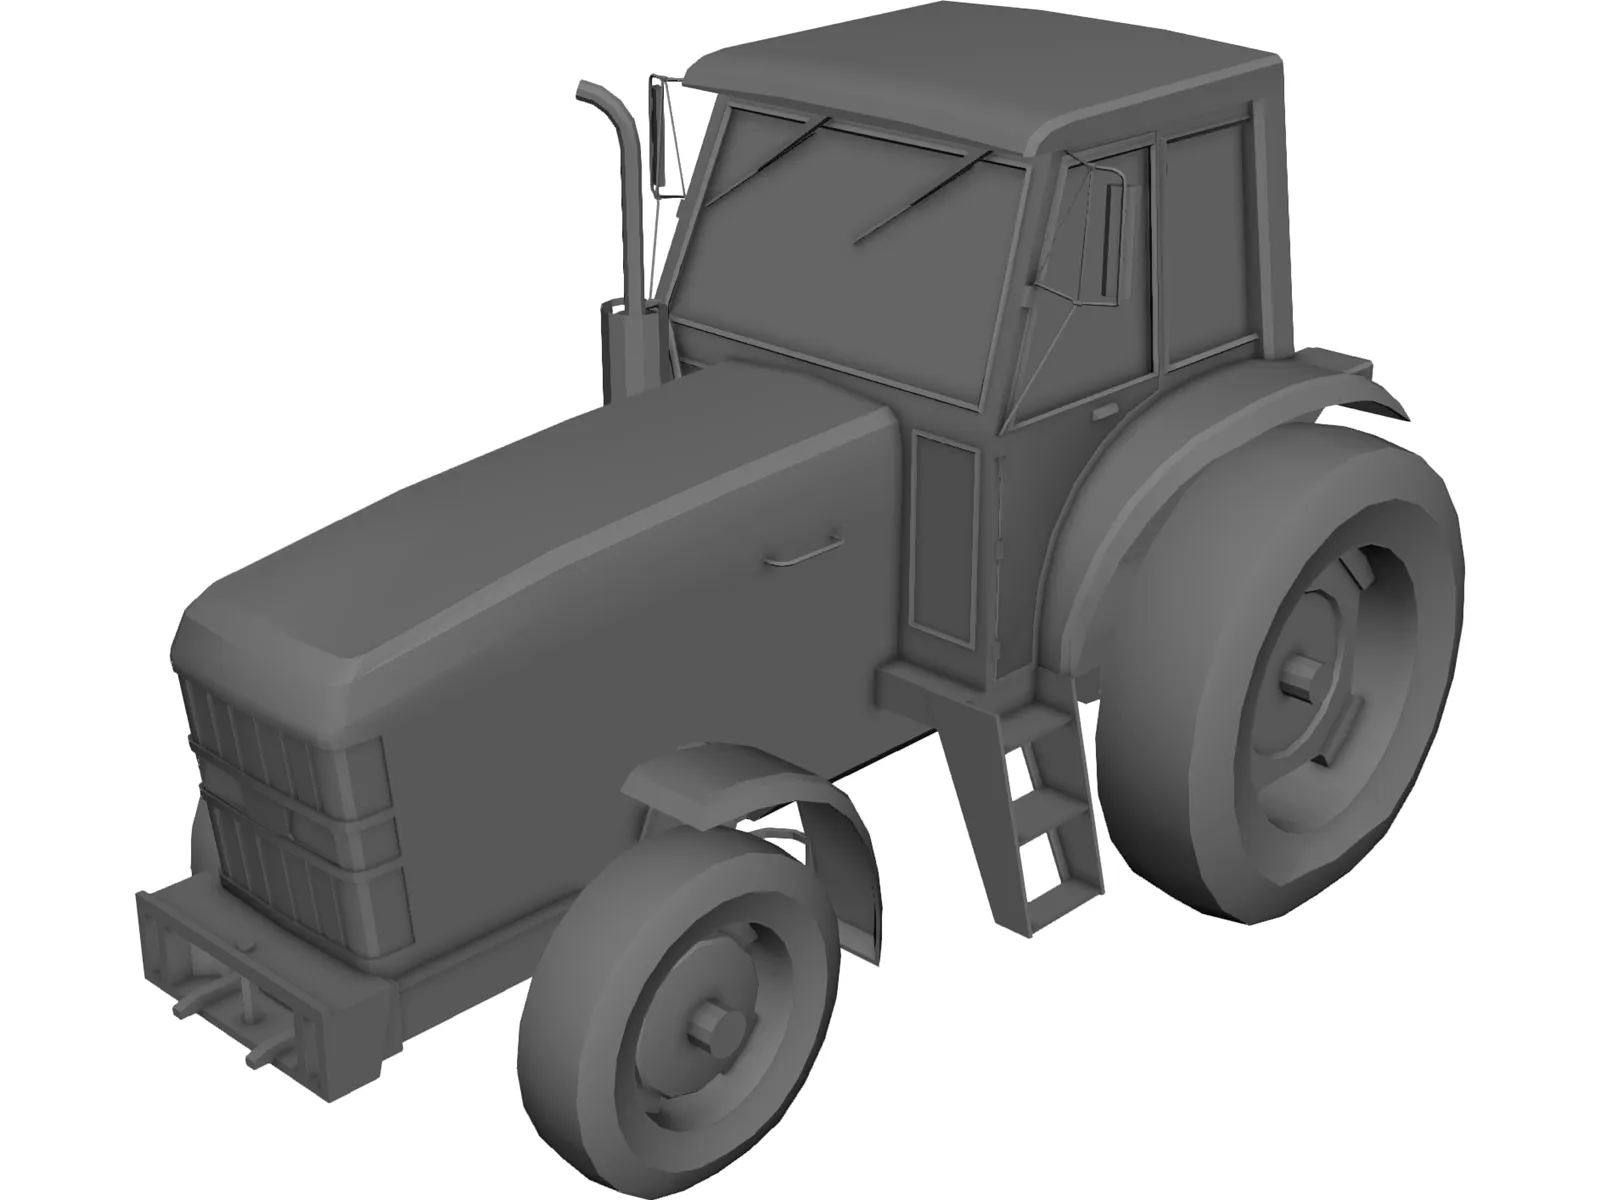 Tractor 3. Трактор МТЗ 3д модель. Трактор МТЗ 50 3д модель. 1523 Трактор 3d модель. Трактор модель d 124.050.